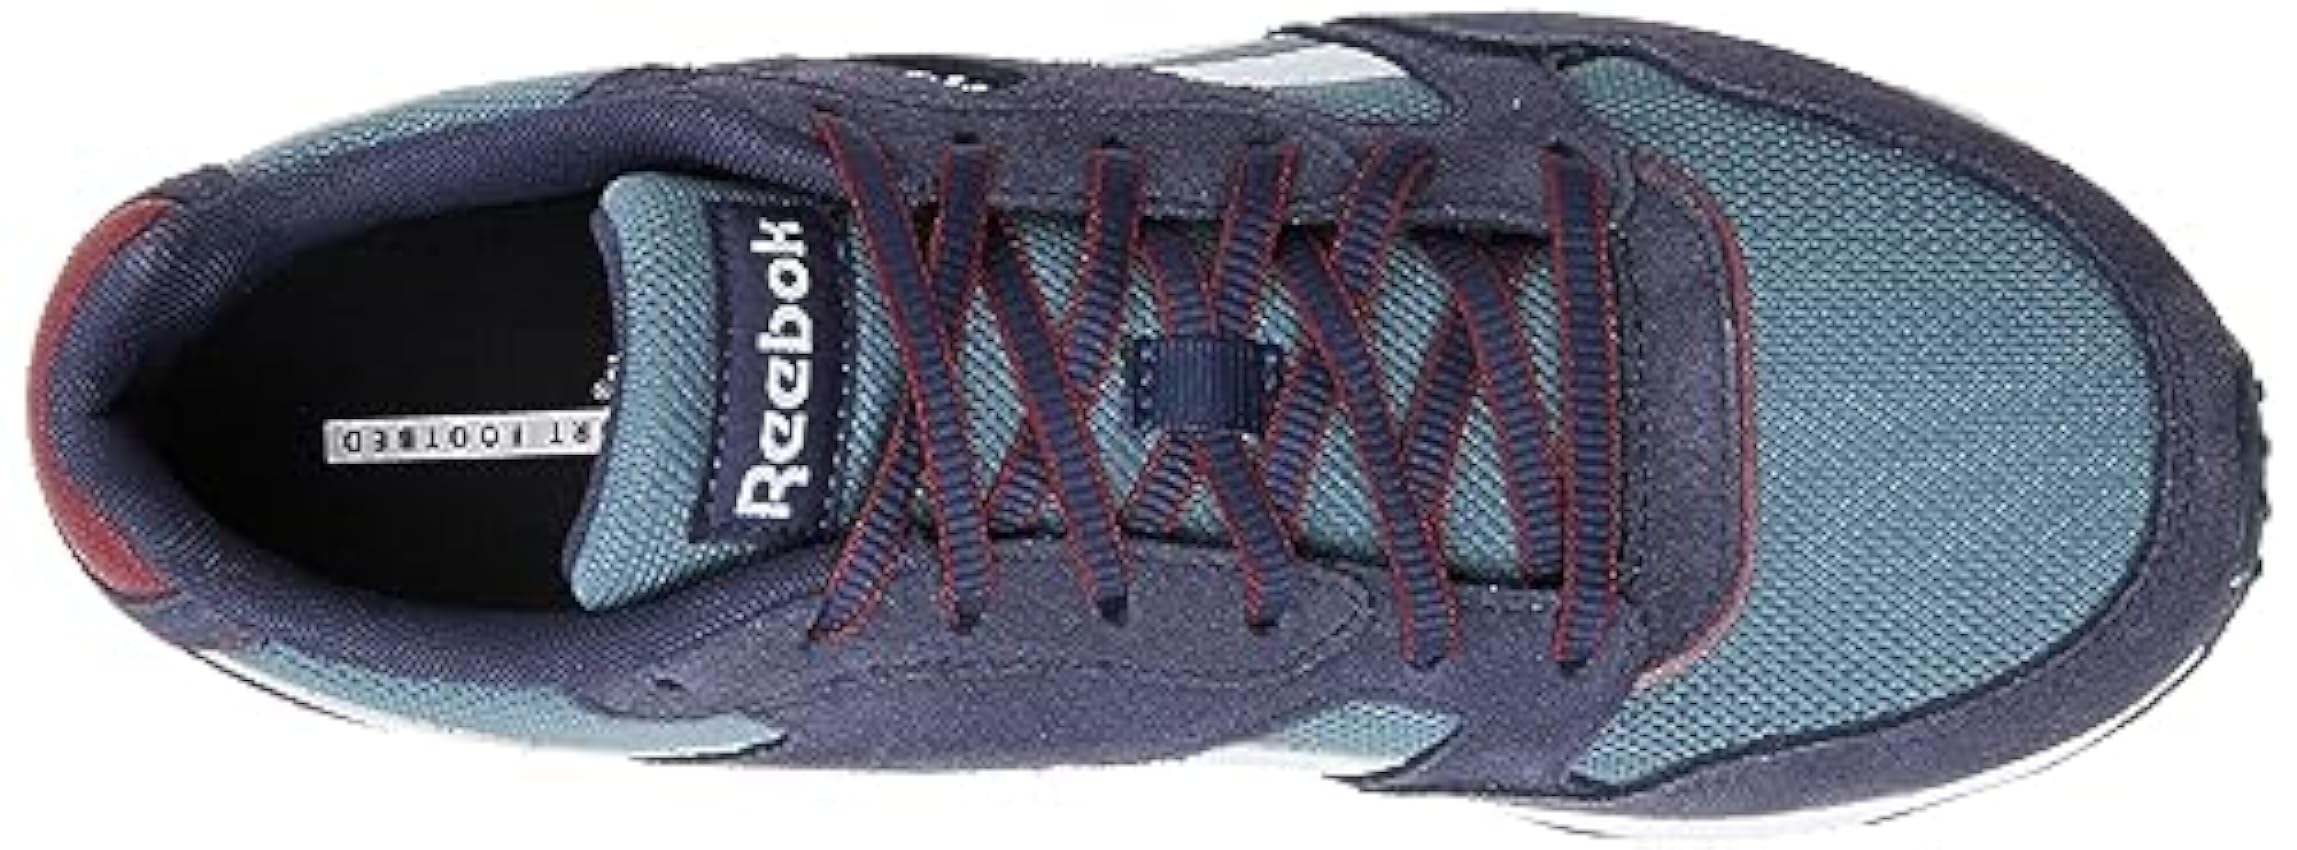 Reebok GL 1000, Zapatillas de Running Unisex Adulto, Multicolor (Vector Navy/Feel Good Blue/Classic Granate), 38.5 EU 5sGjbqhl